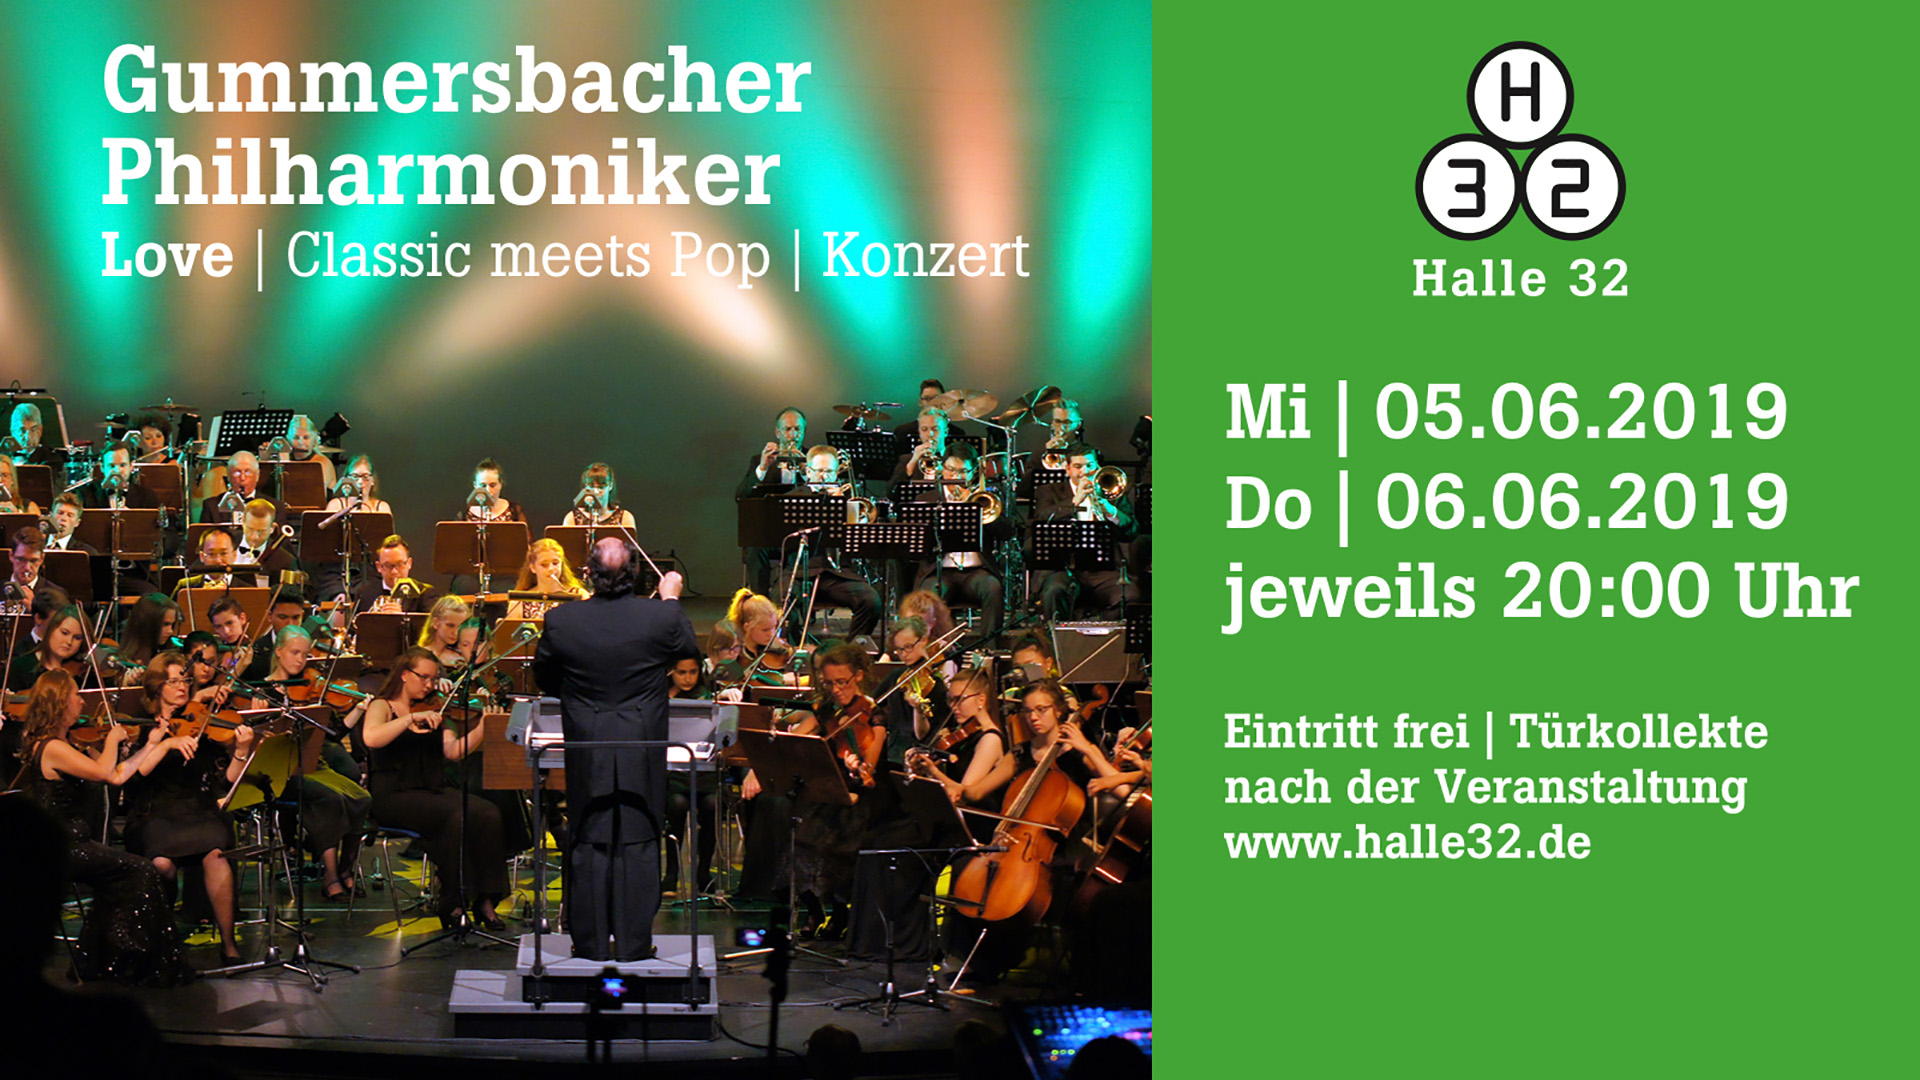 Halle 32 | Gummersbacher Philharmoniker